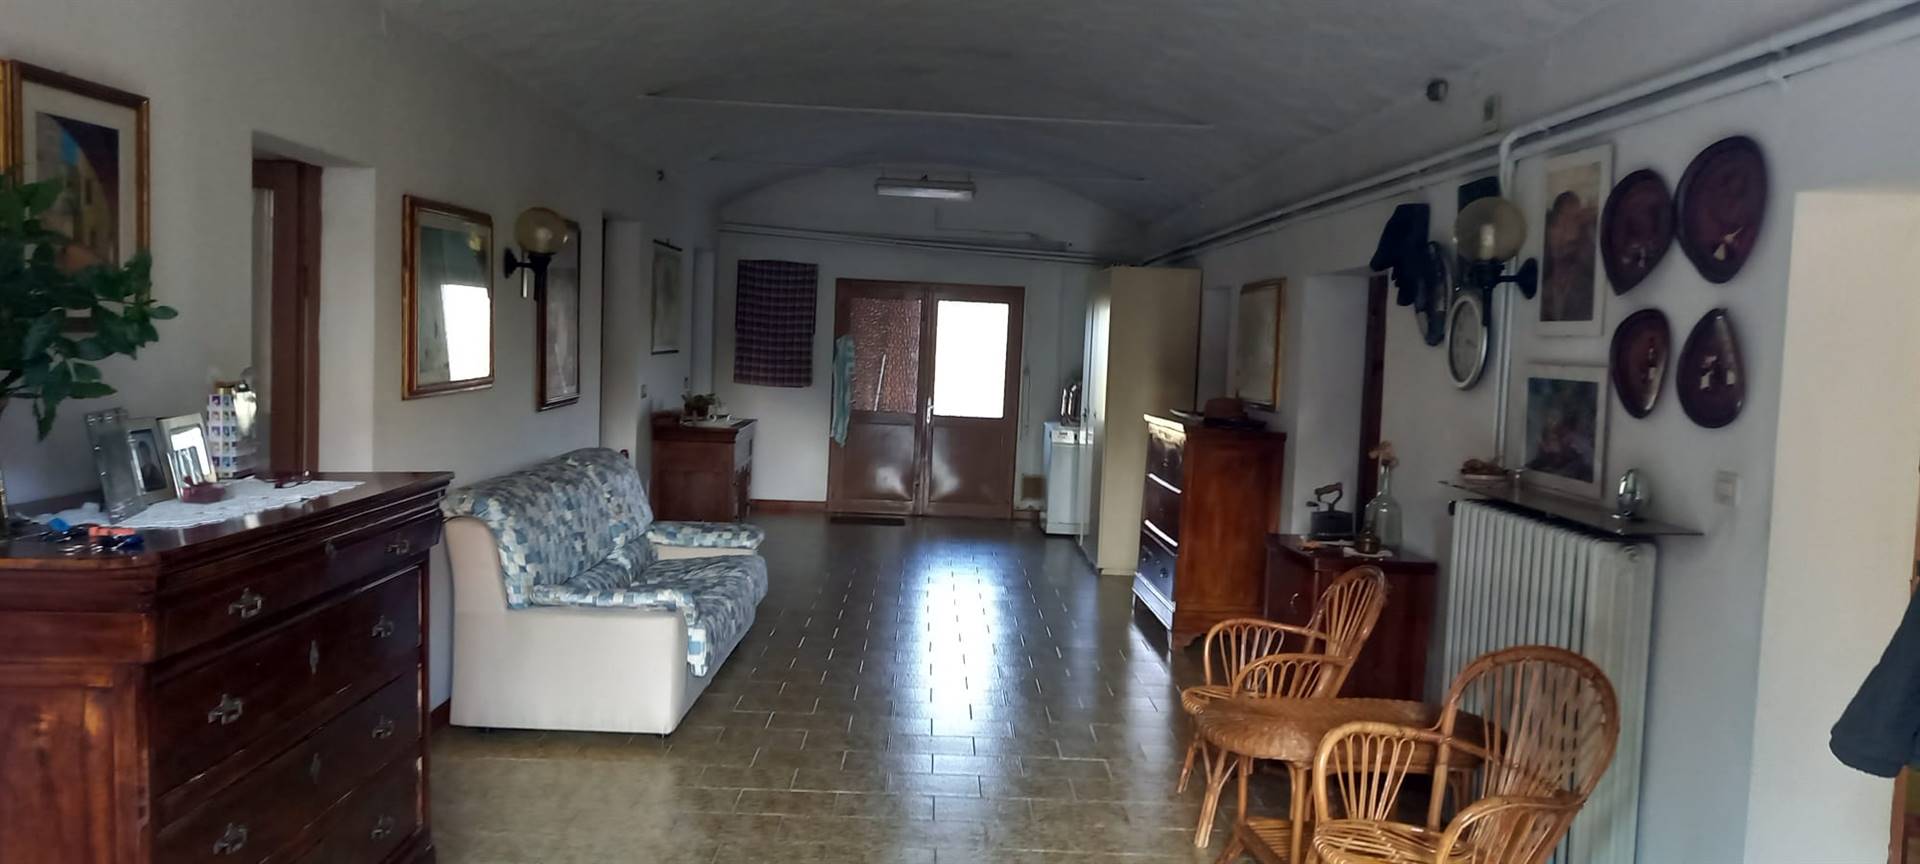 Casa singola abitabile in zona Santa Vittoria a Gualtieri